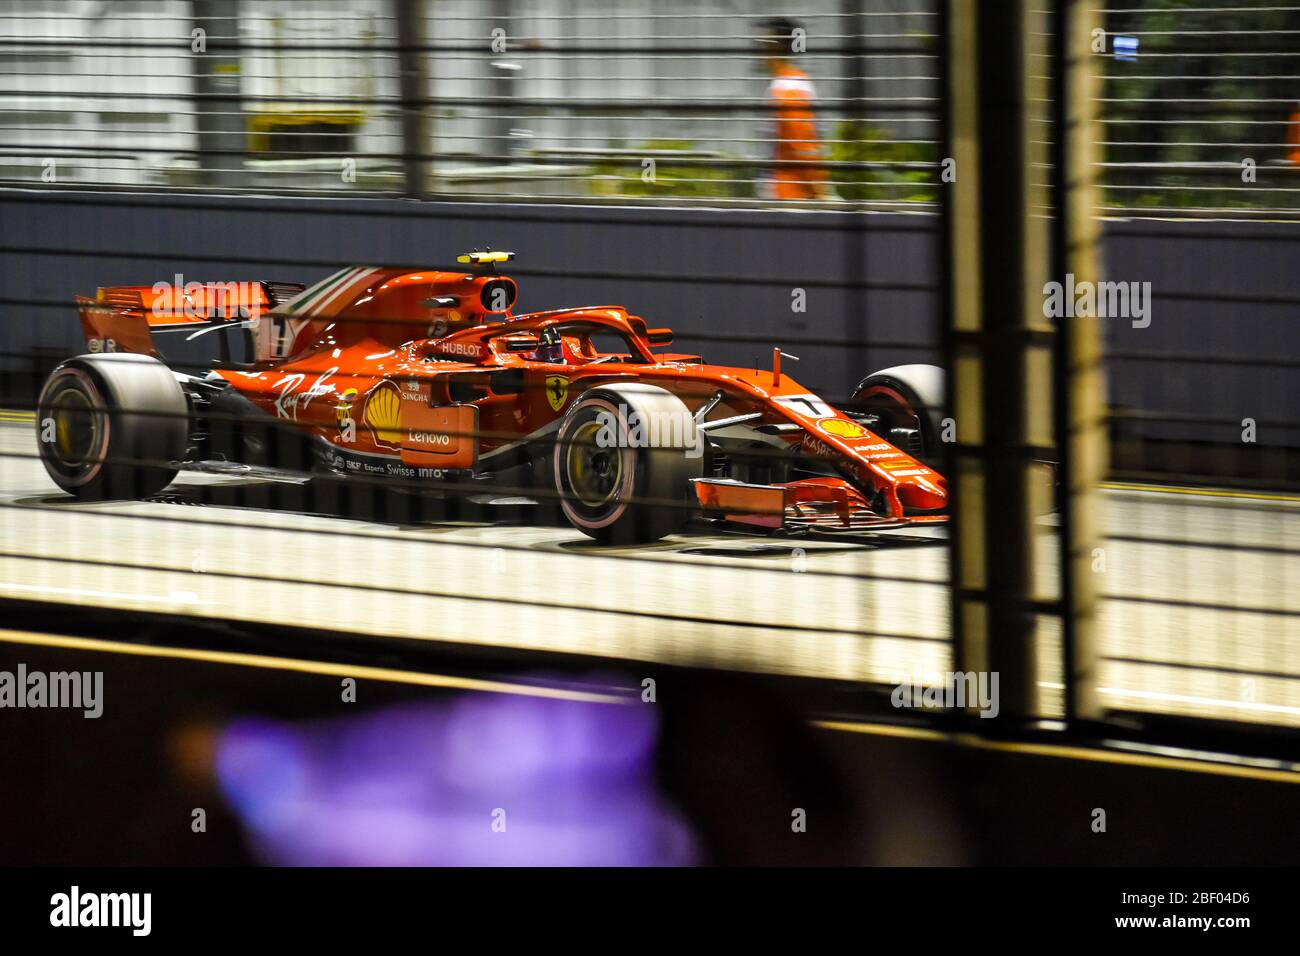 Kimi Raikkonen in the Singapore F1 Grand Prix 2018 Stock Photo